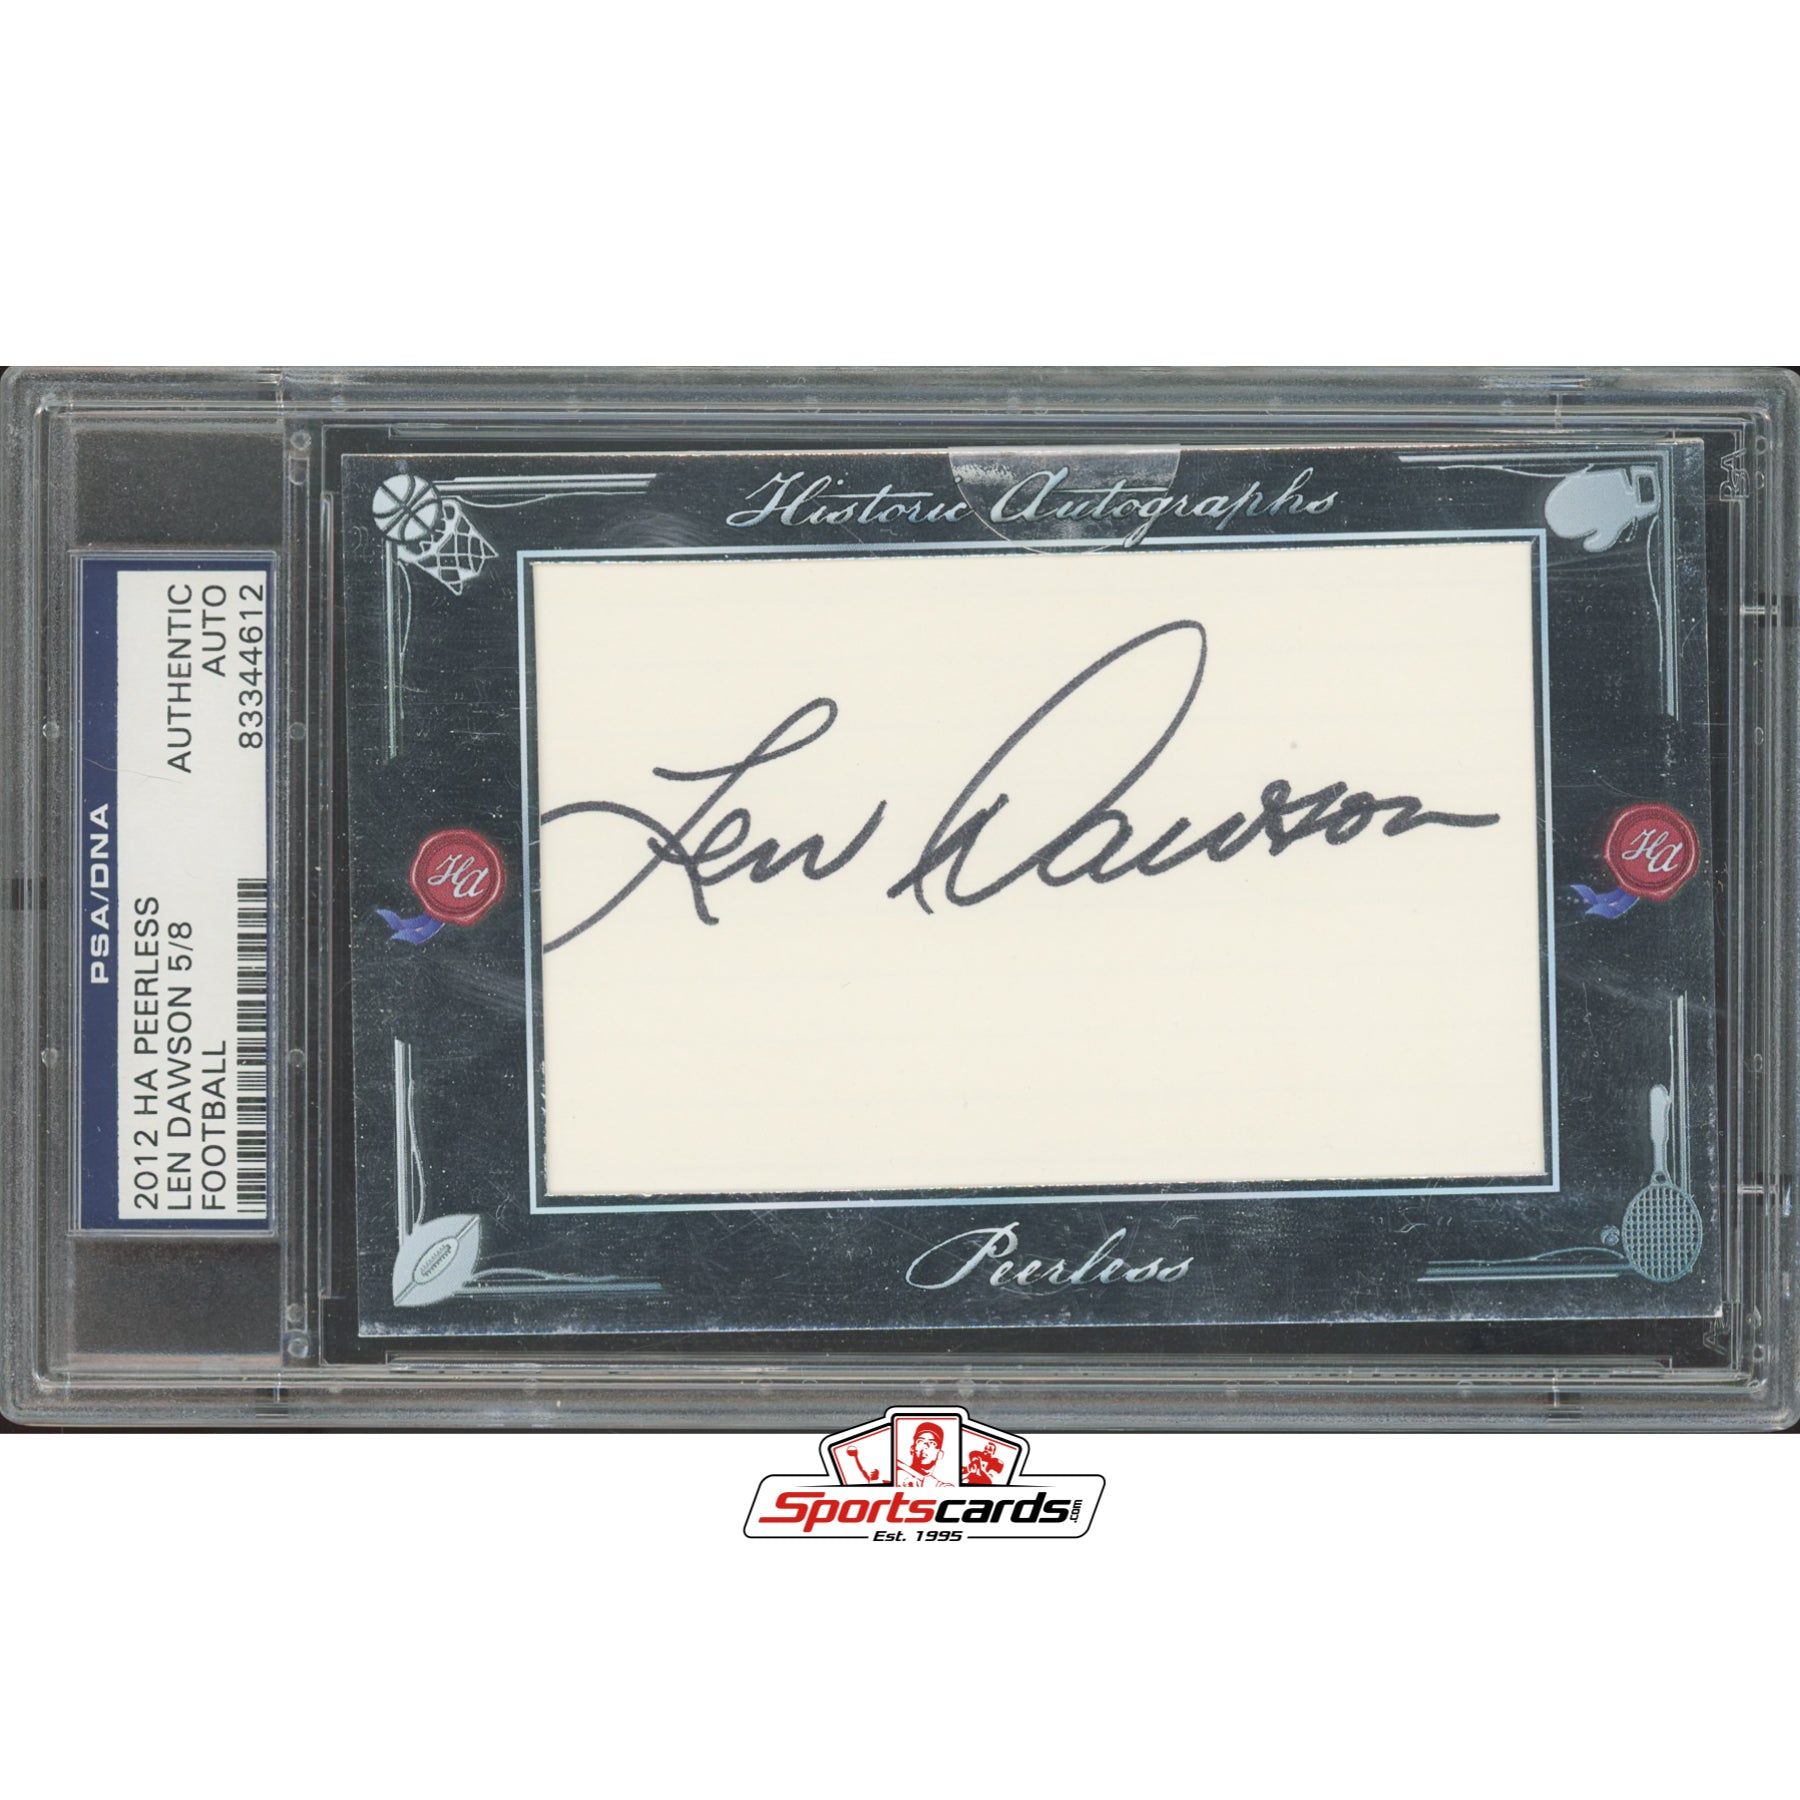 Len Dawson Signed 2012 Historic Autographs Card #ed 5/8 - PSA